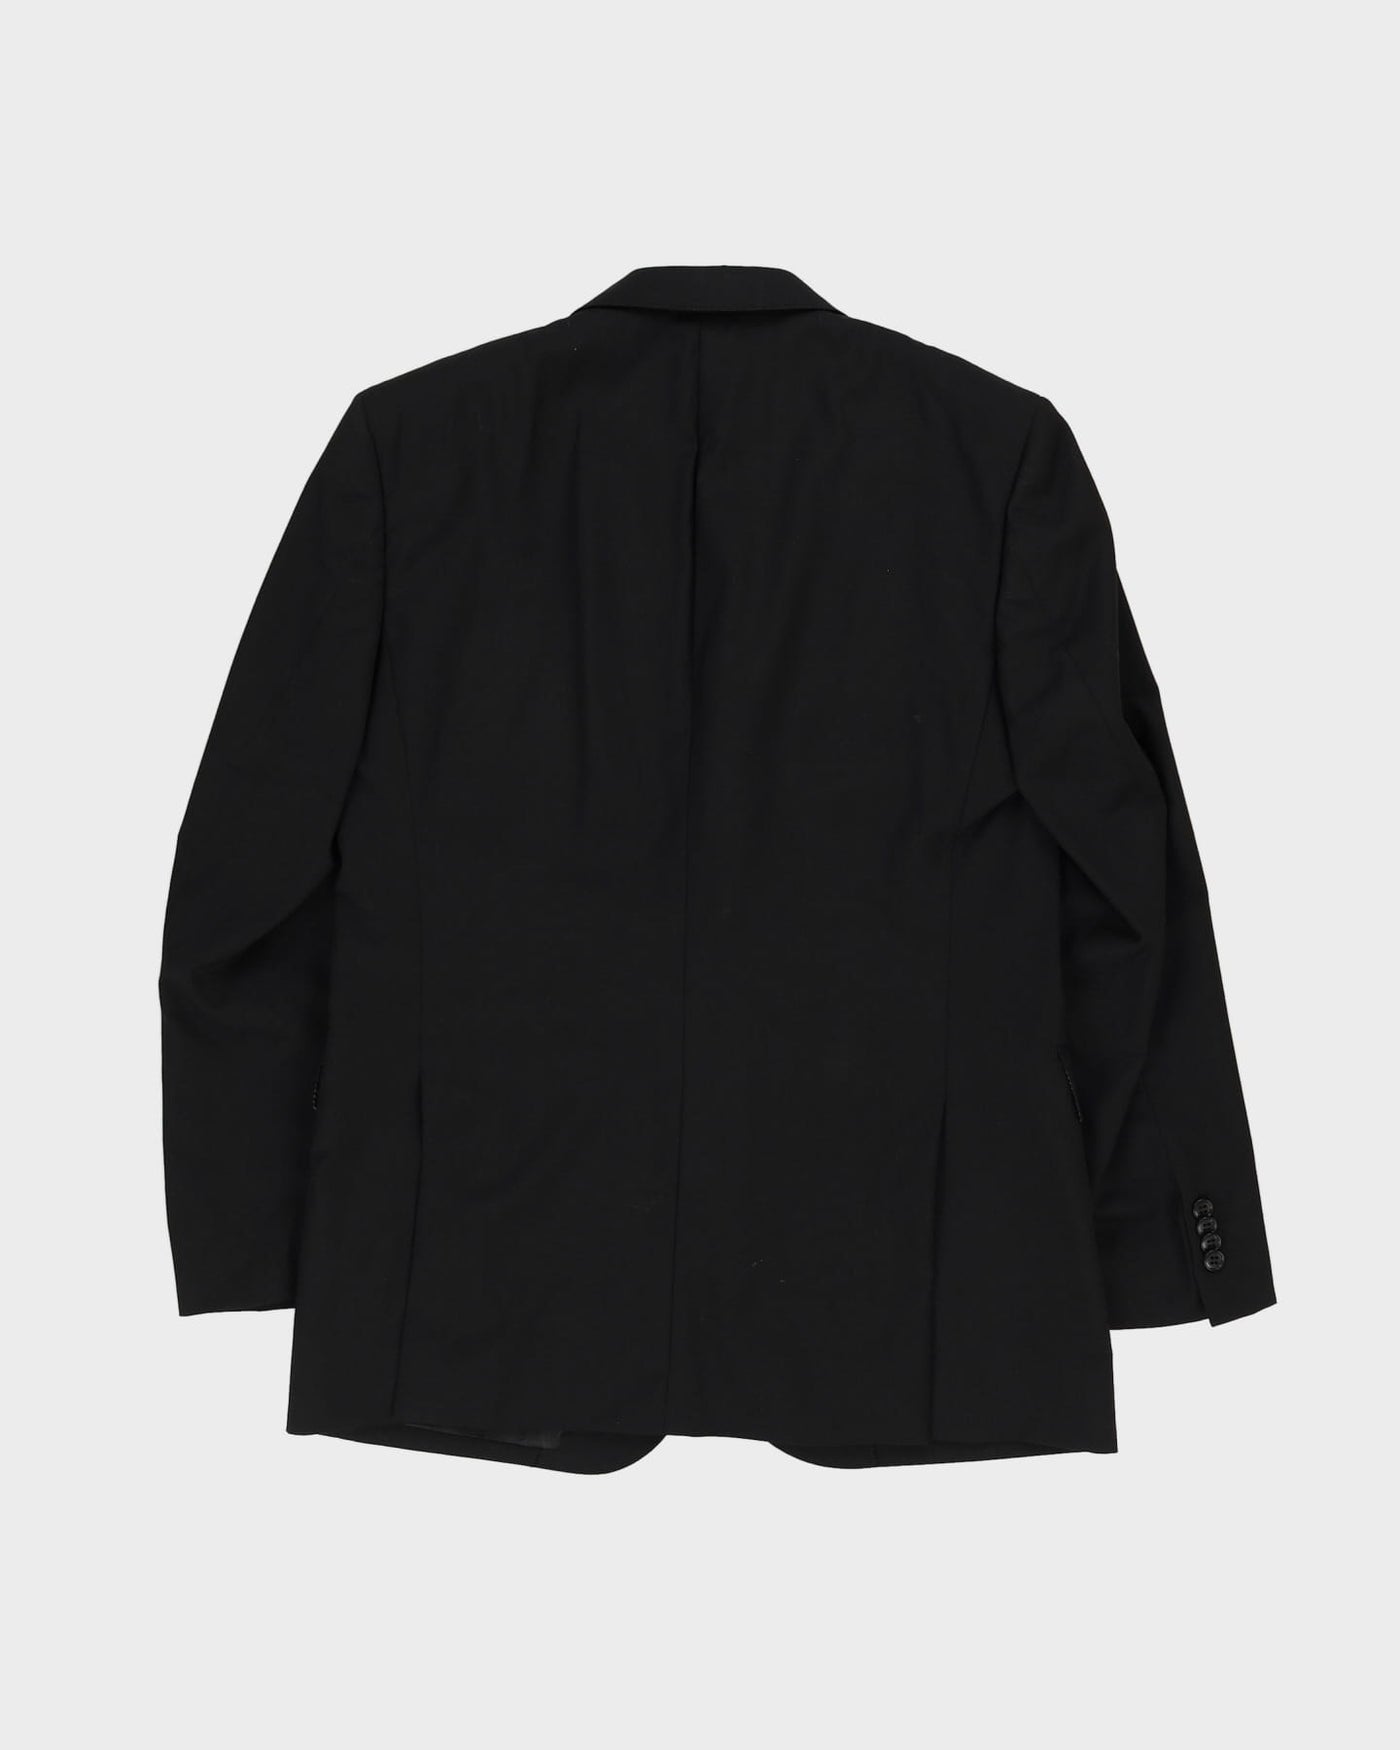 Guy Laroche Black Wool Jacket And Trouser Suit - S